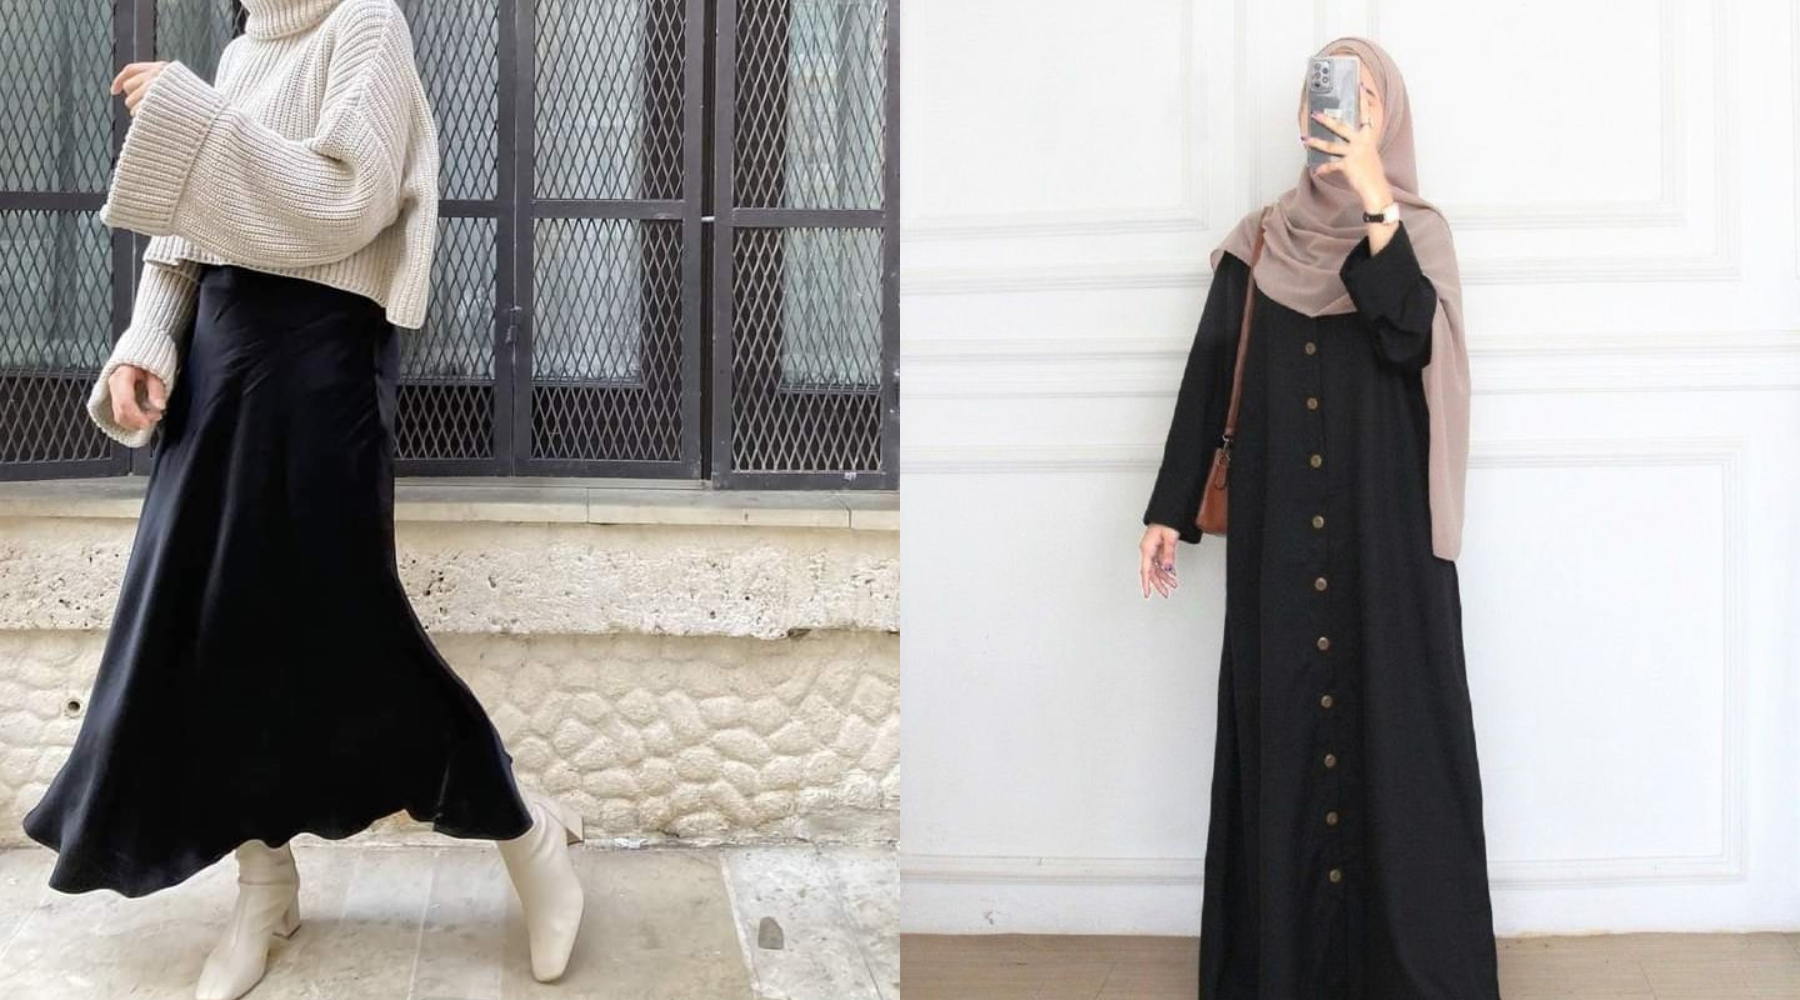 Bingung Pakai Baju Apa Kalau Mau Kajian ke Masjid? Cek Rekomendasi OOTD Hijab Sopan & Stylish!